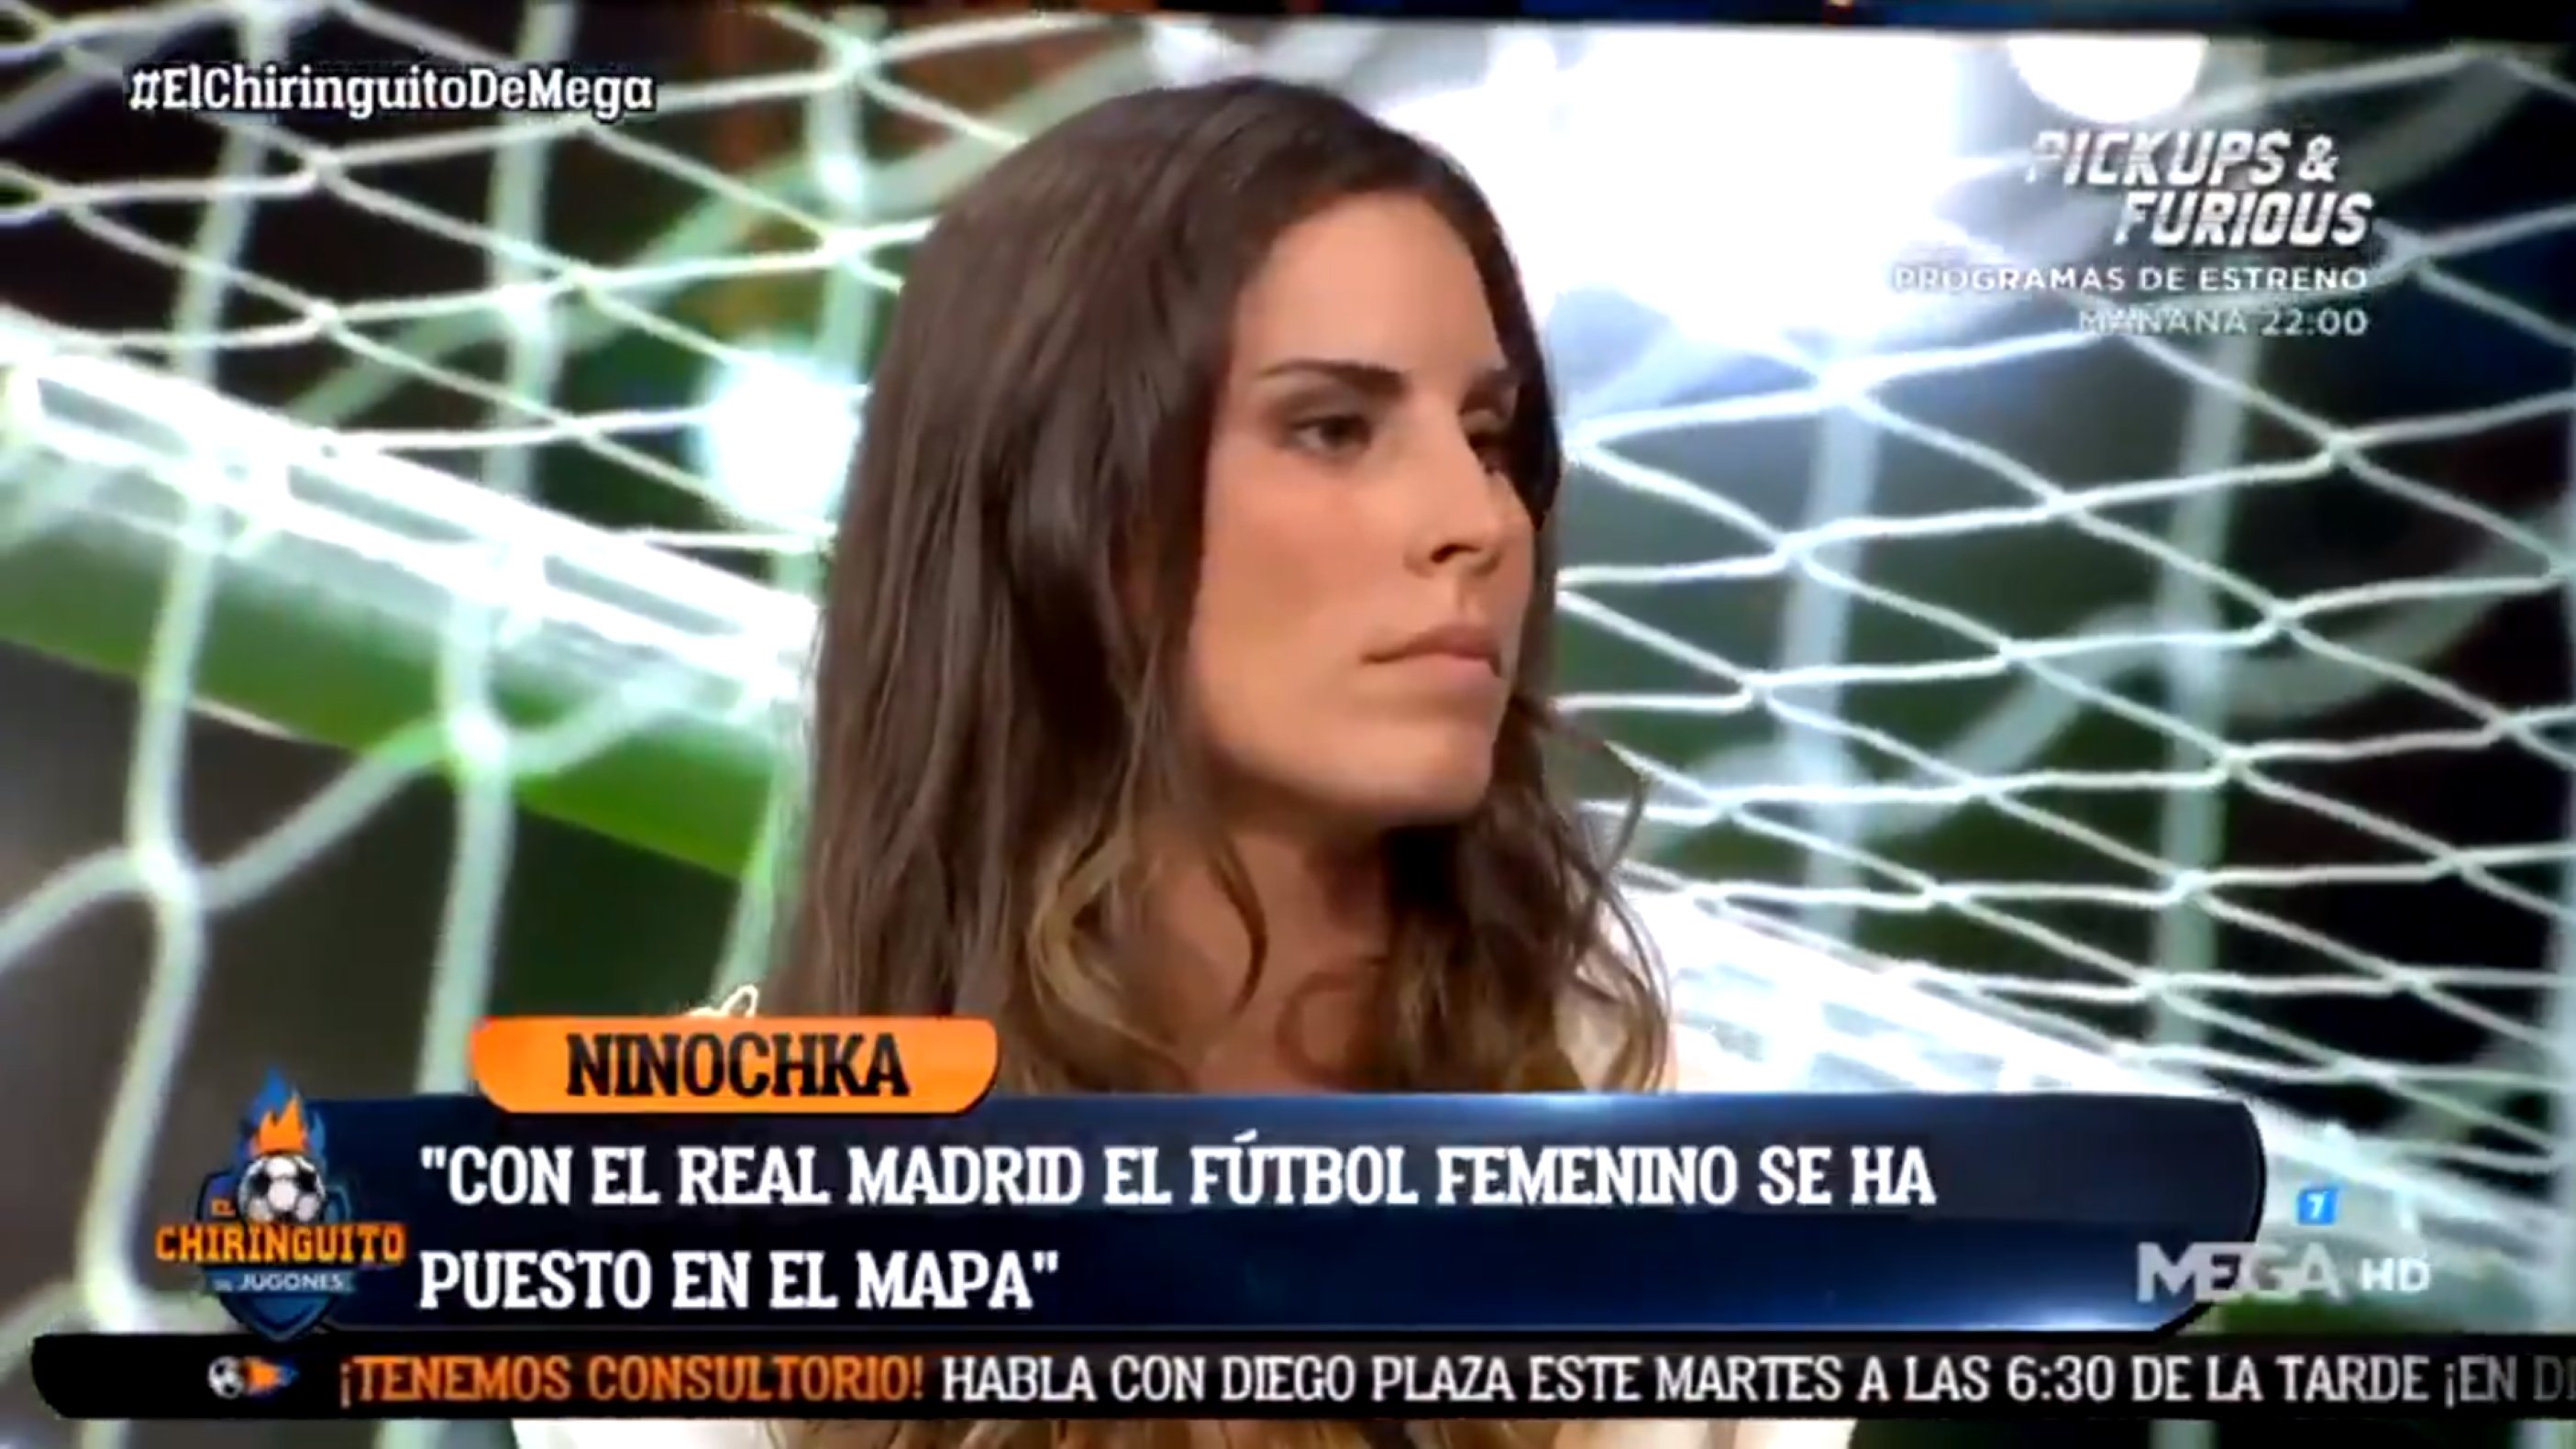 Fanatisme madridista al futbol femení: Una jugadora indigna a 'El Chiringuito'